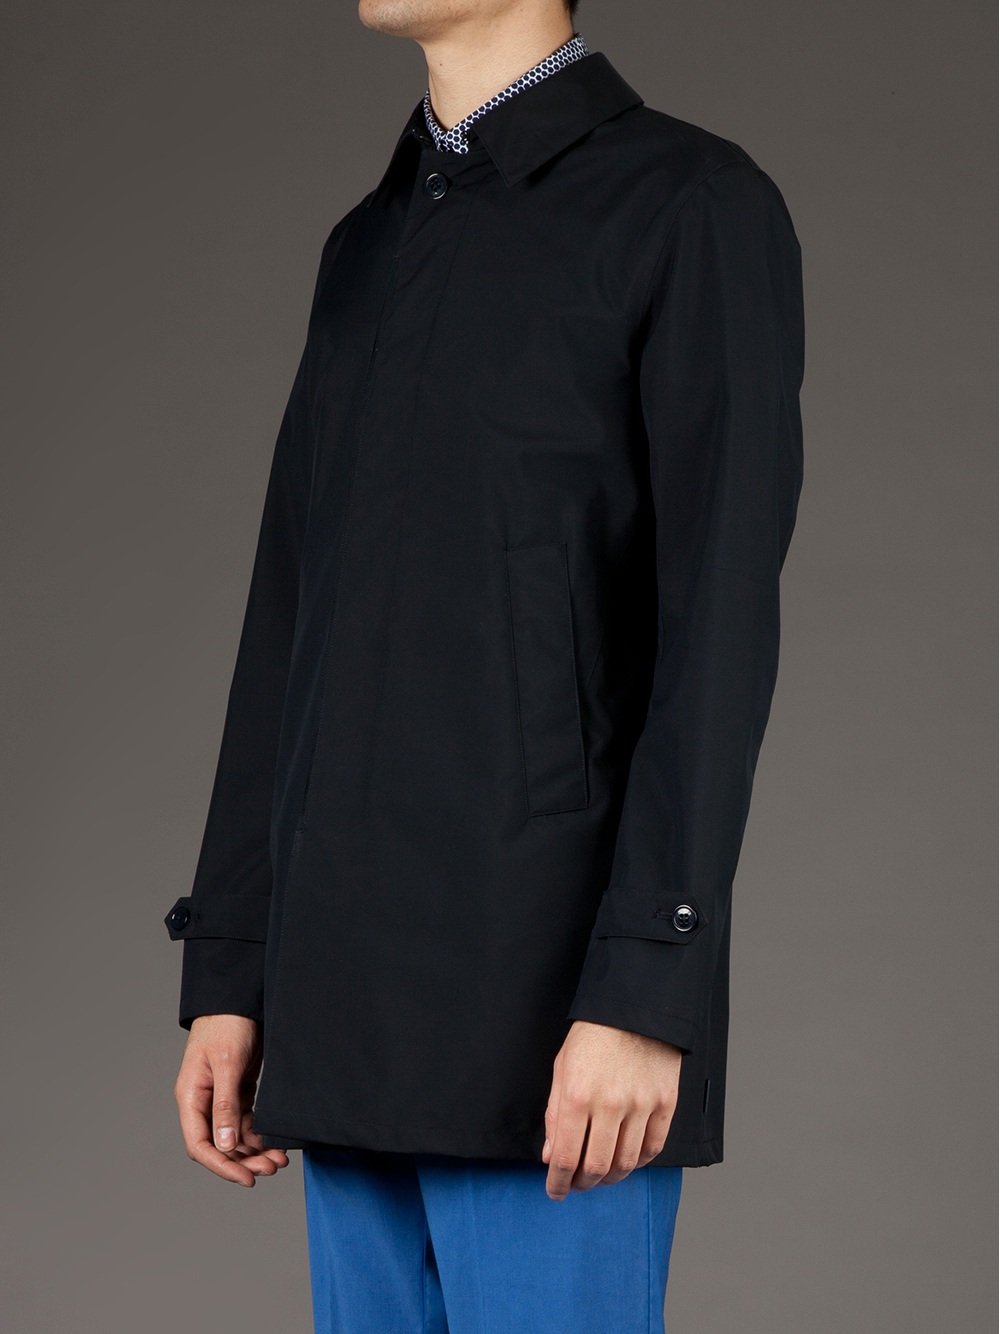 Herno Trench Coat in Black for Men | Lyst